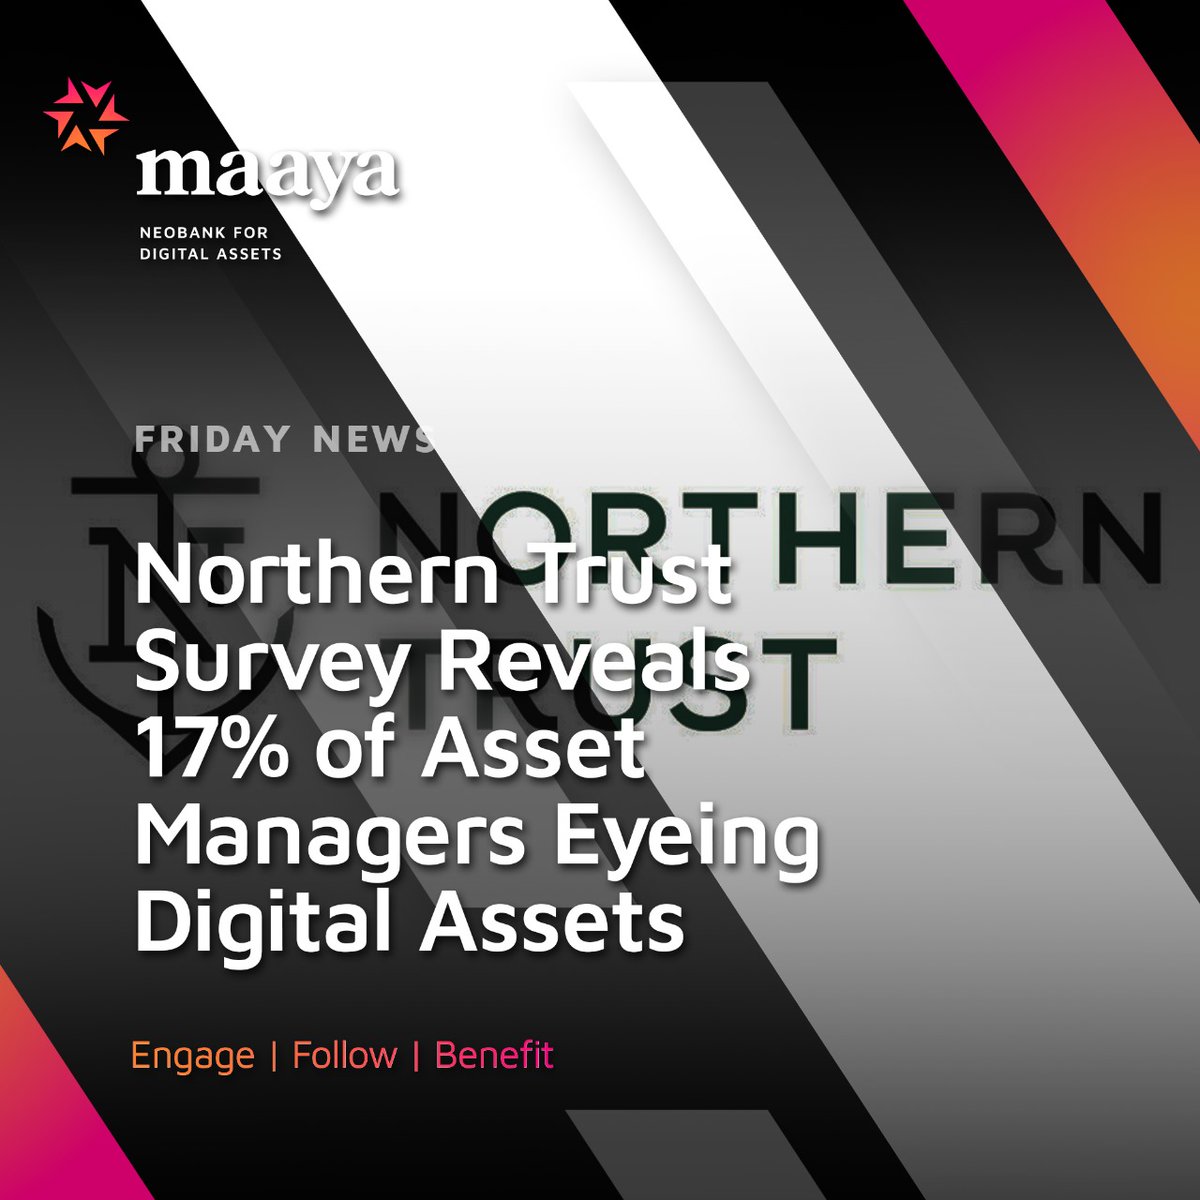 Exploring New Horizons: Northern Trust Survey Highlights Growing Interest in Digital Assets Among Asset Managers.

#DigiMaaya #NorthernTrust #AssetManagers #DigitalAssets #Investment #Finance